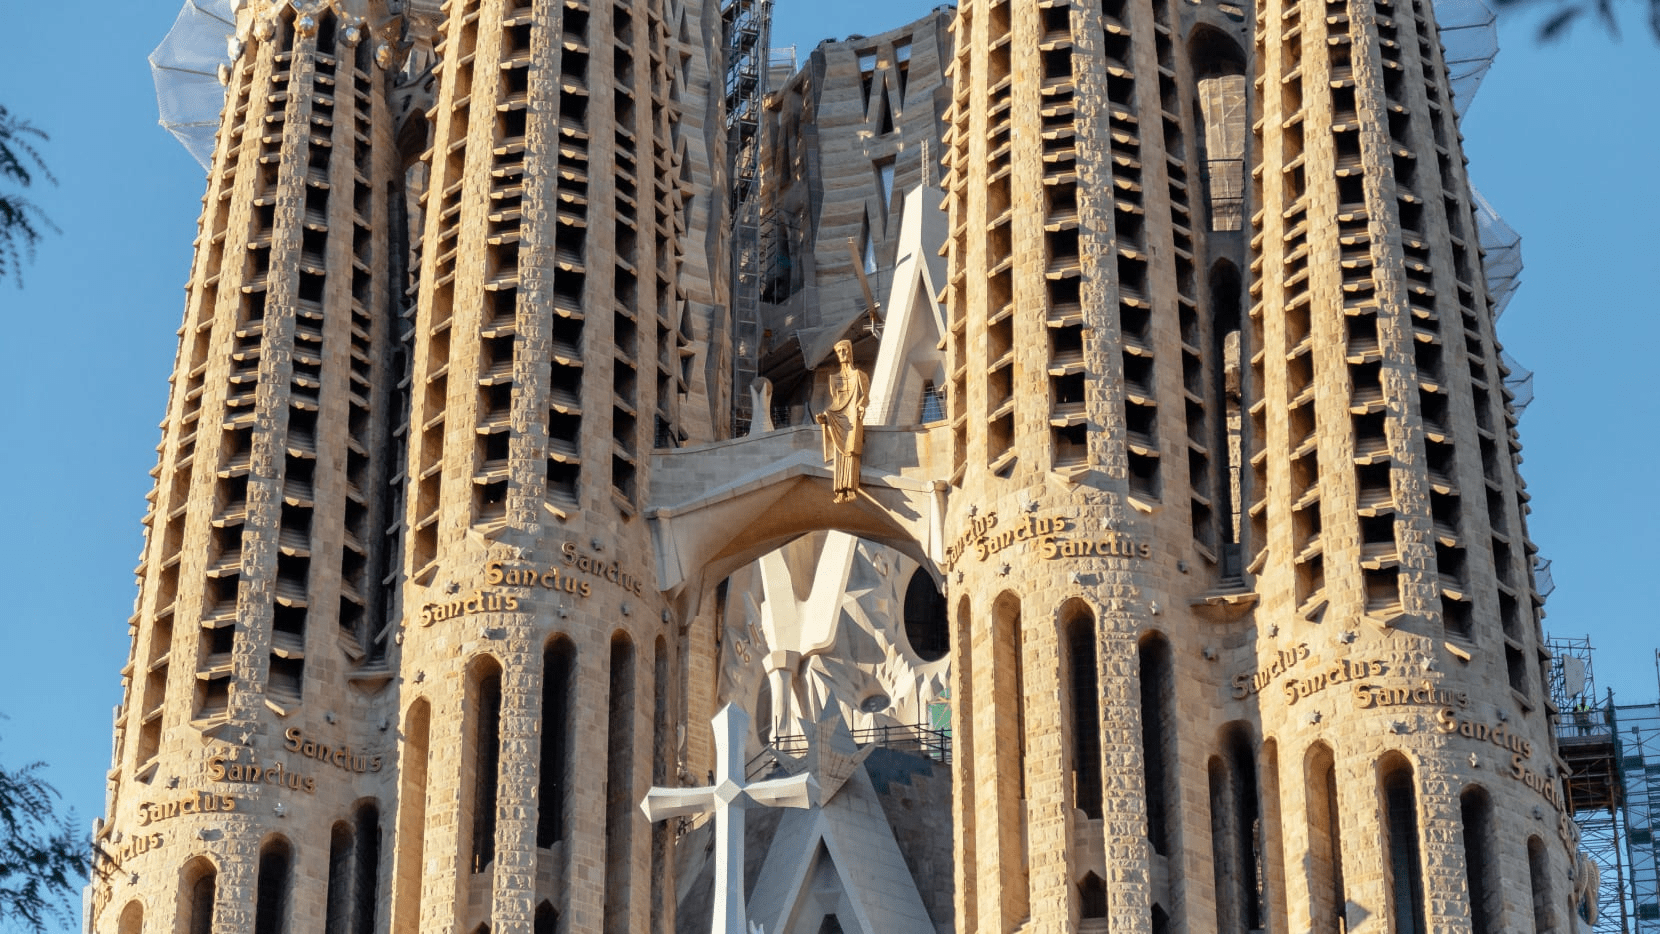 Sagrada Familia by Gaudi - Basilica in Barcelona, Spain - 137 Year Project 26